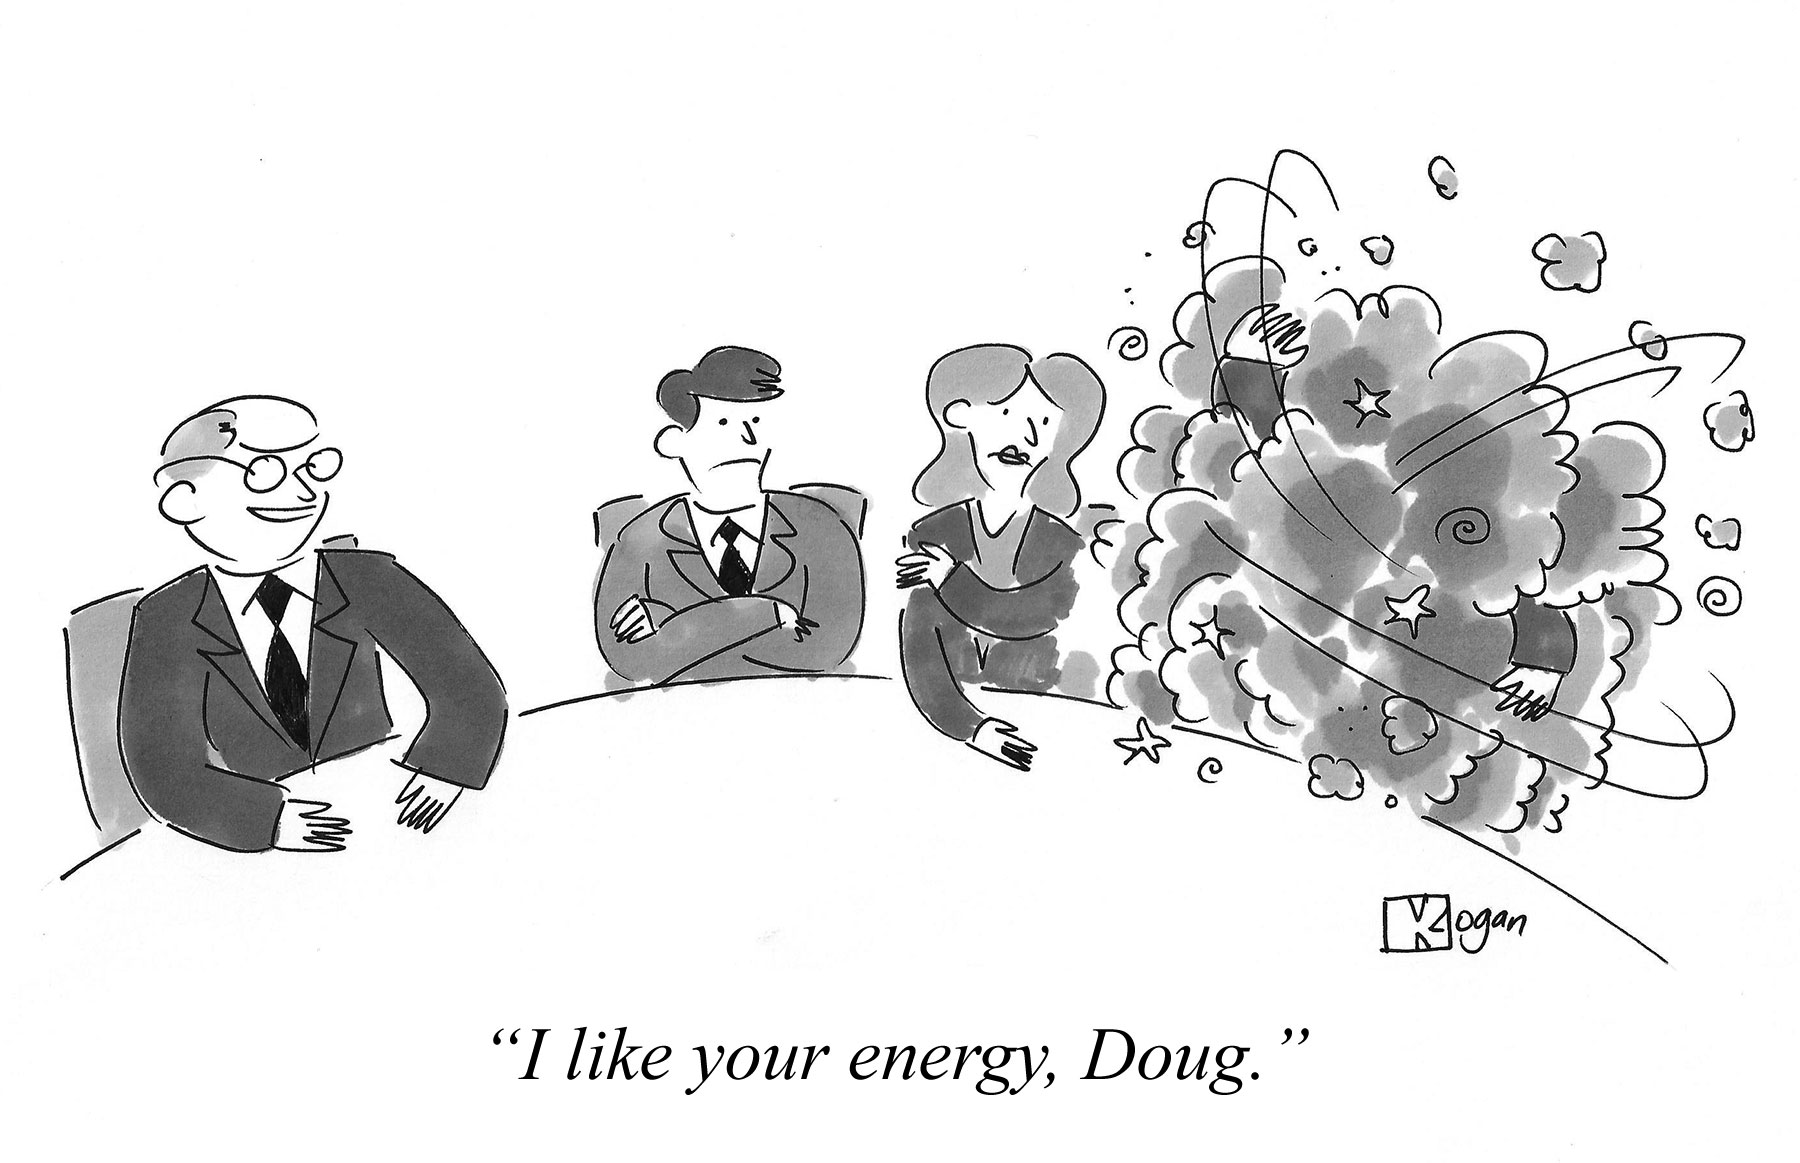 Cartoon about a high-energy employee